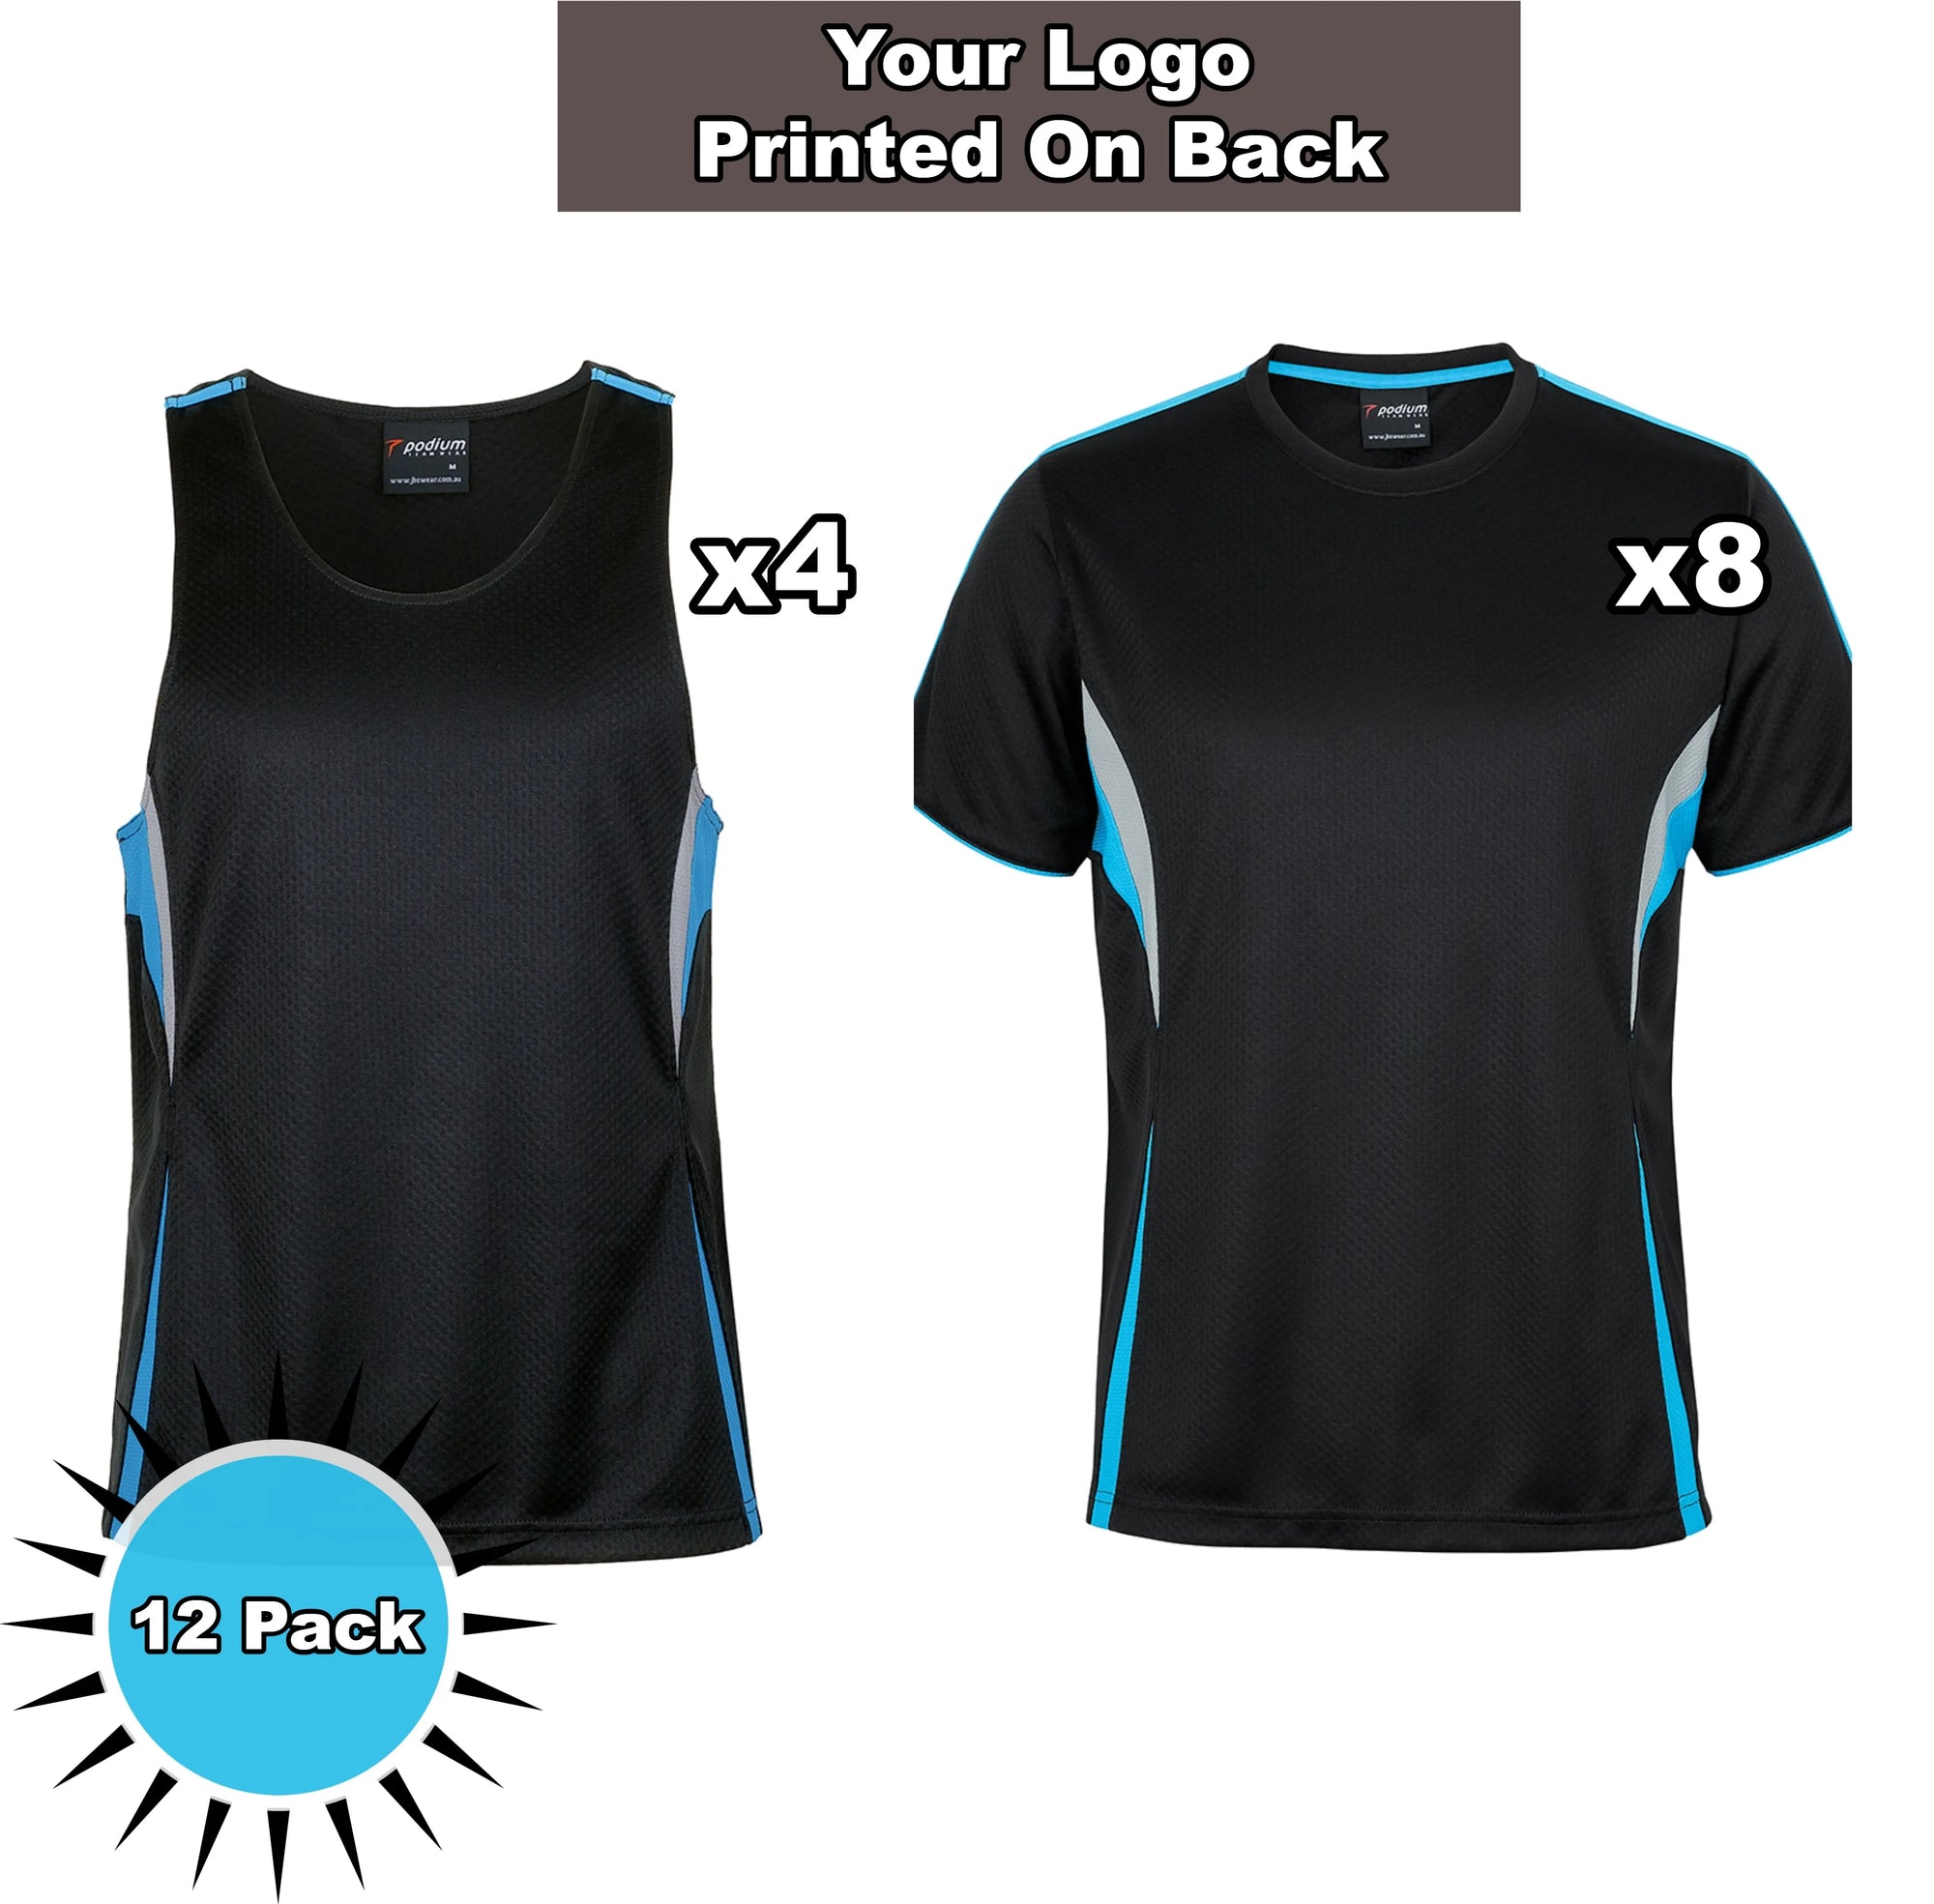 Podium Cool Singlet/Tee Shirt 12 Pack Printed On Back - Safe-T-Rex Workwear Pty Ltd